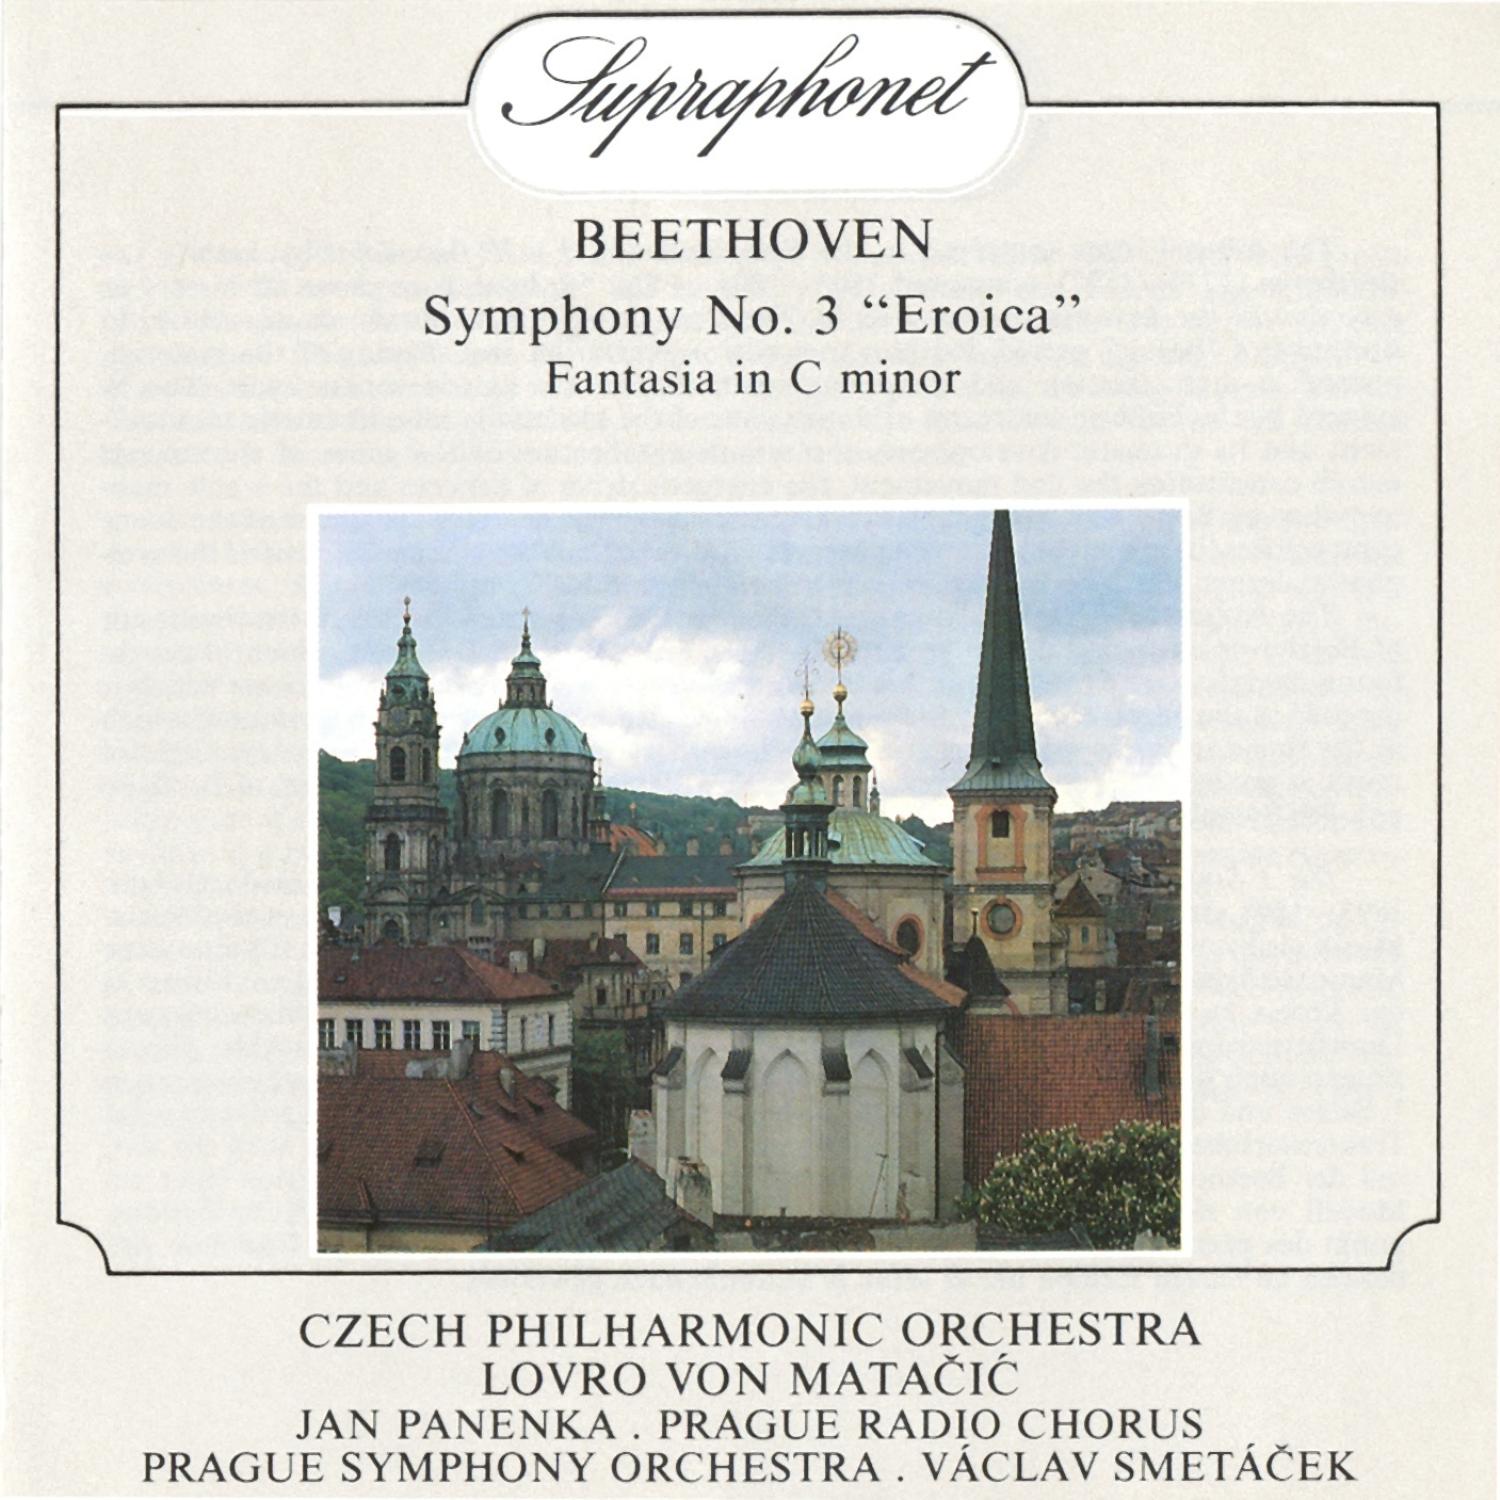 Beethoven: Symphony No. 3 "Eroica", Fantasia in C minor